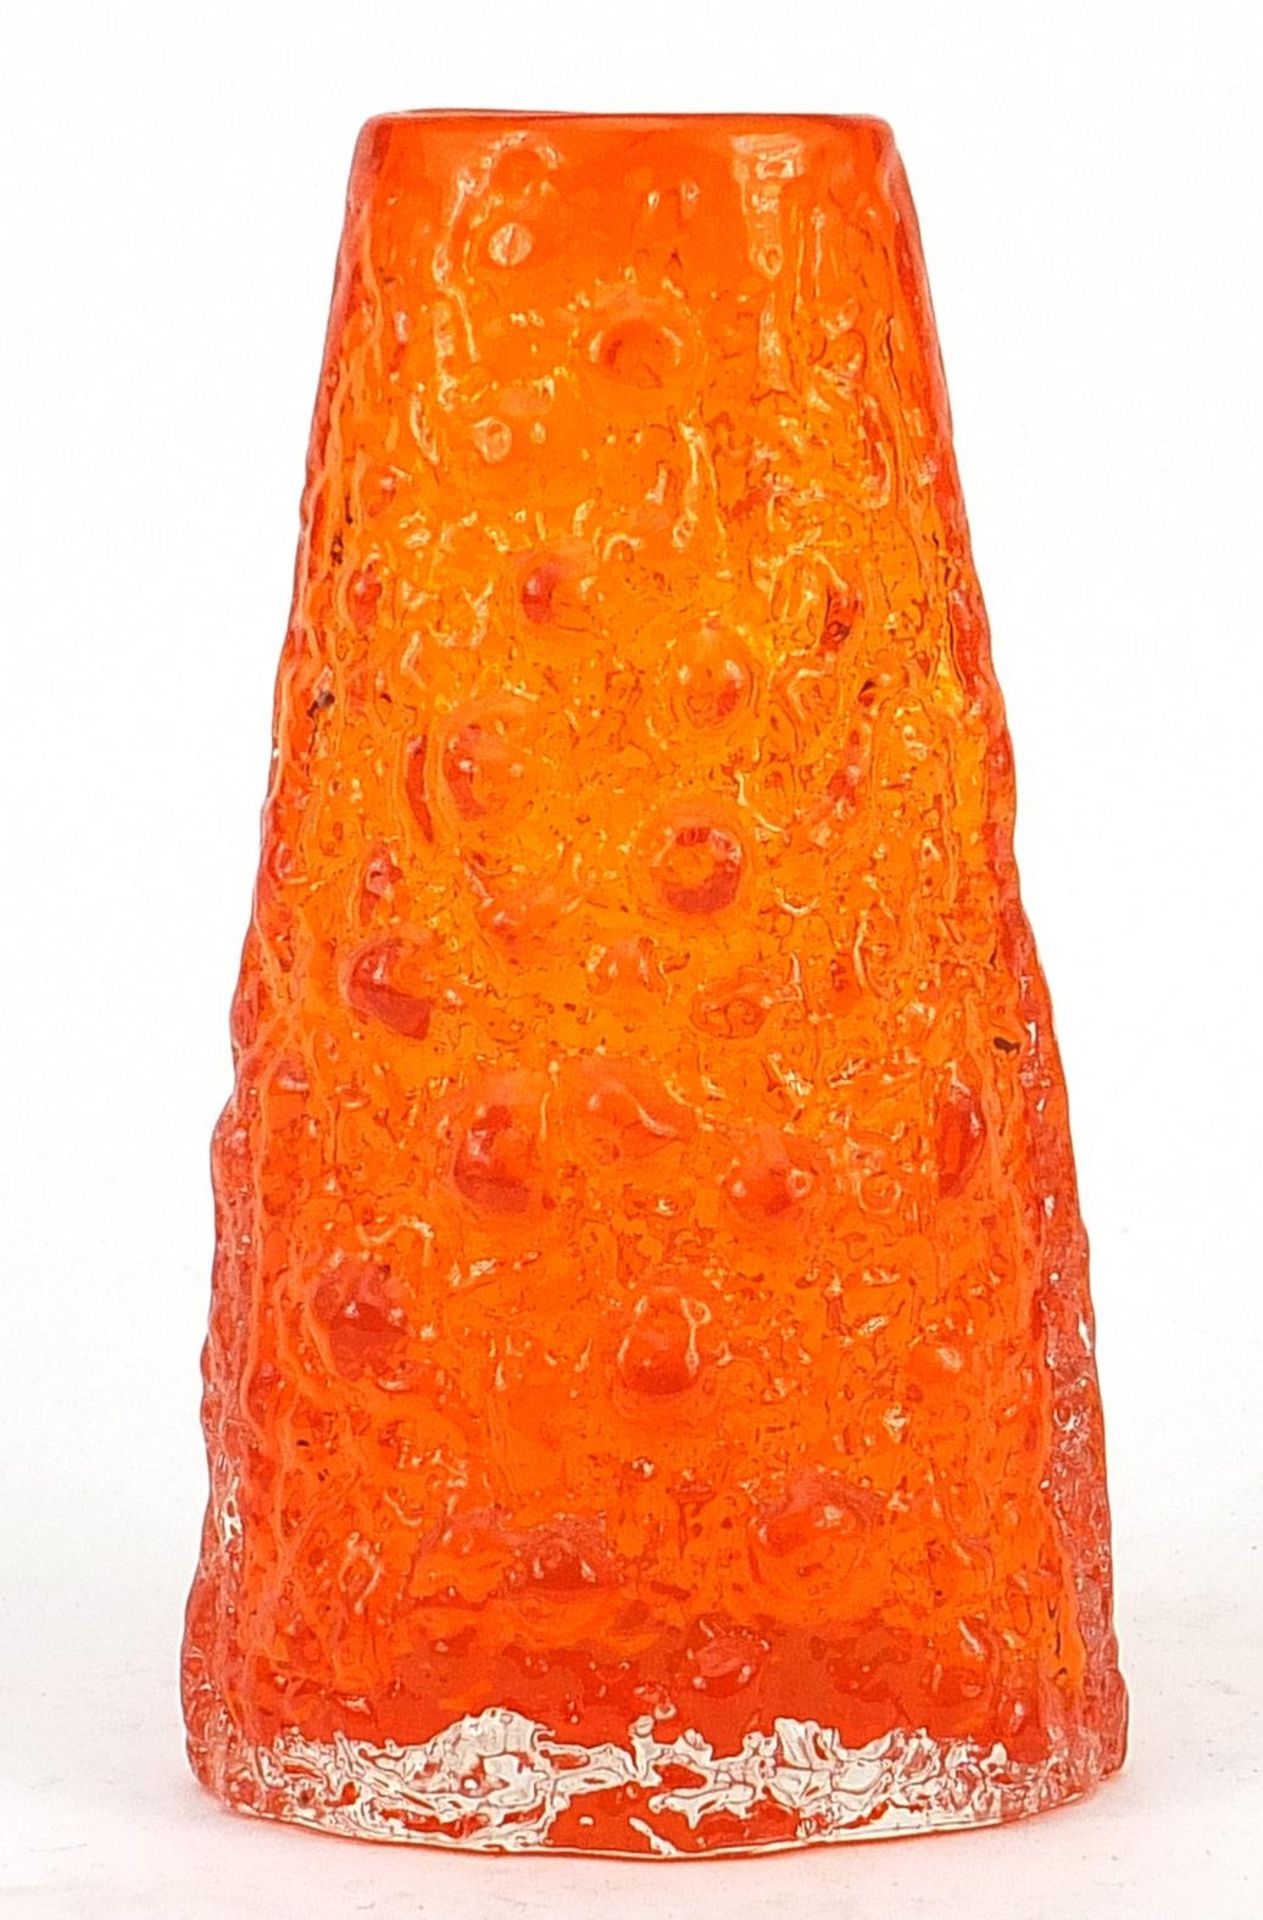 Geoffrey Baxter for Whitefriars, volcano glass vase in tangerine, 18cm high Overall in generally - Bild 2 aus 3